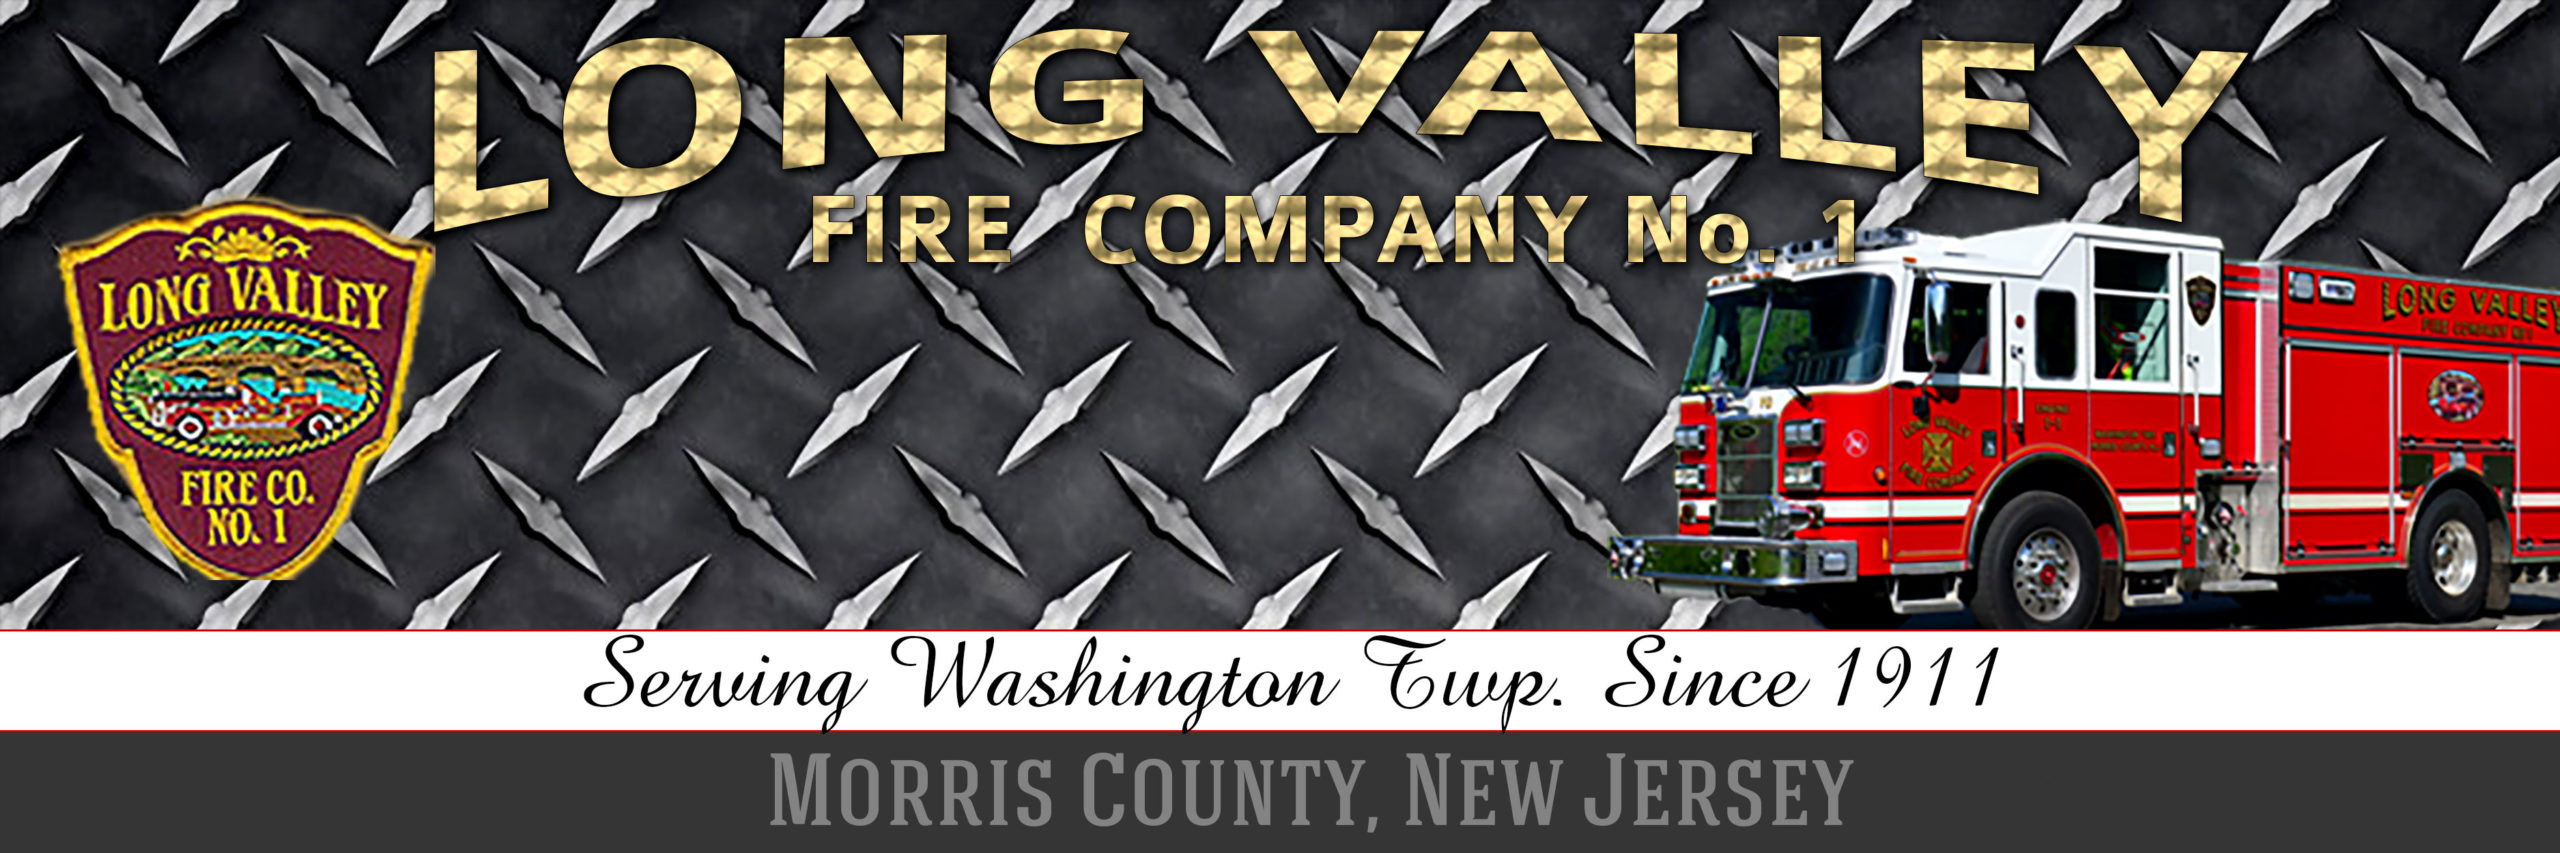 Long Valley Fire Company